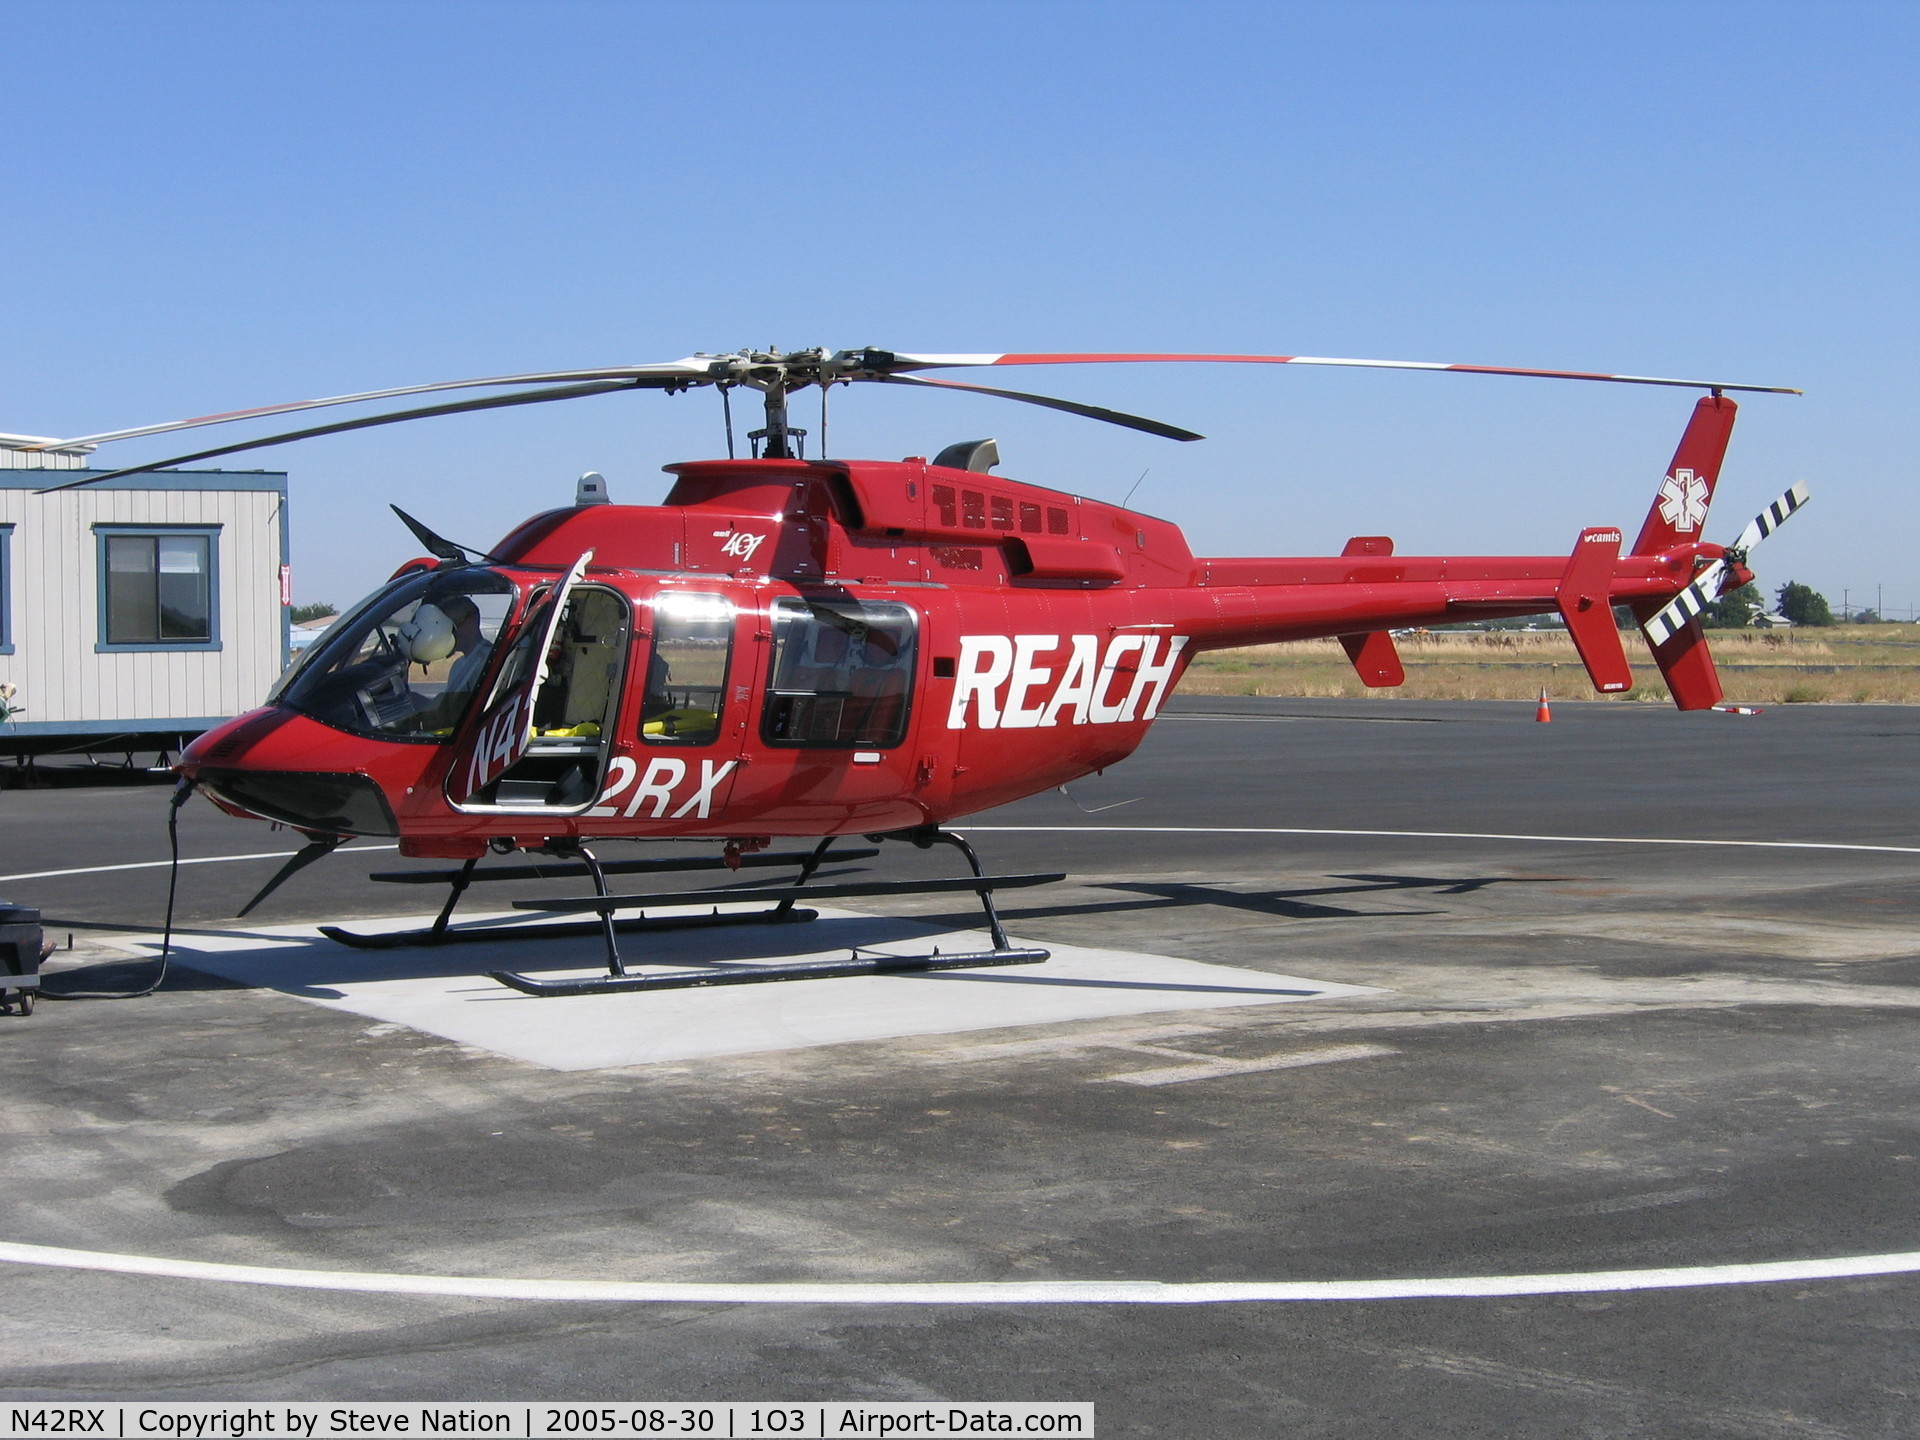 N42RX, 1998 Bell 407 C/N 53290, REACH 1998 Bell 407 @ Lodi Airport, CA